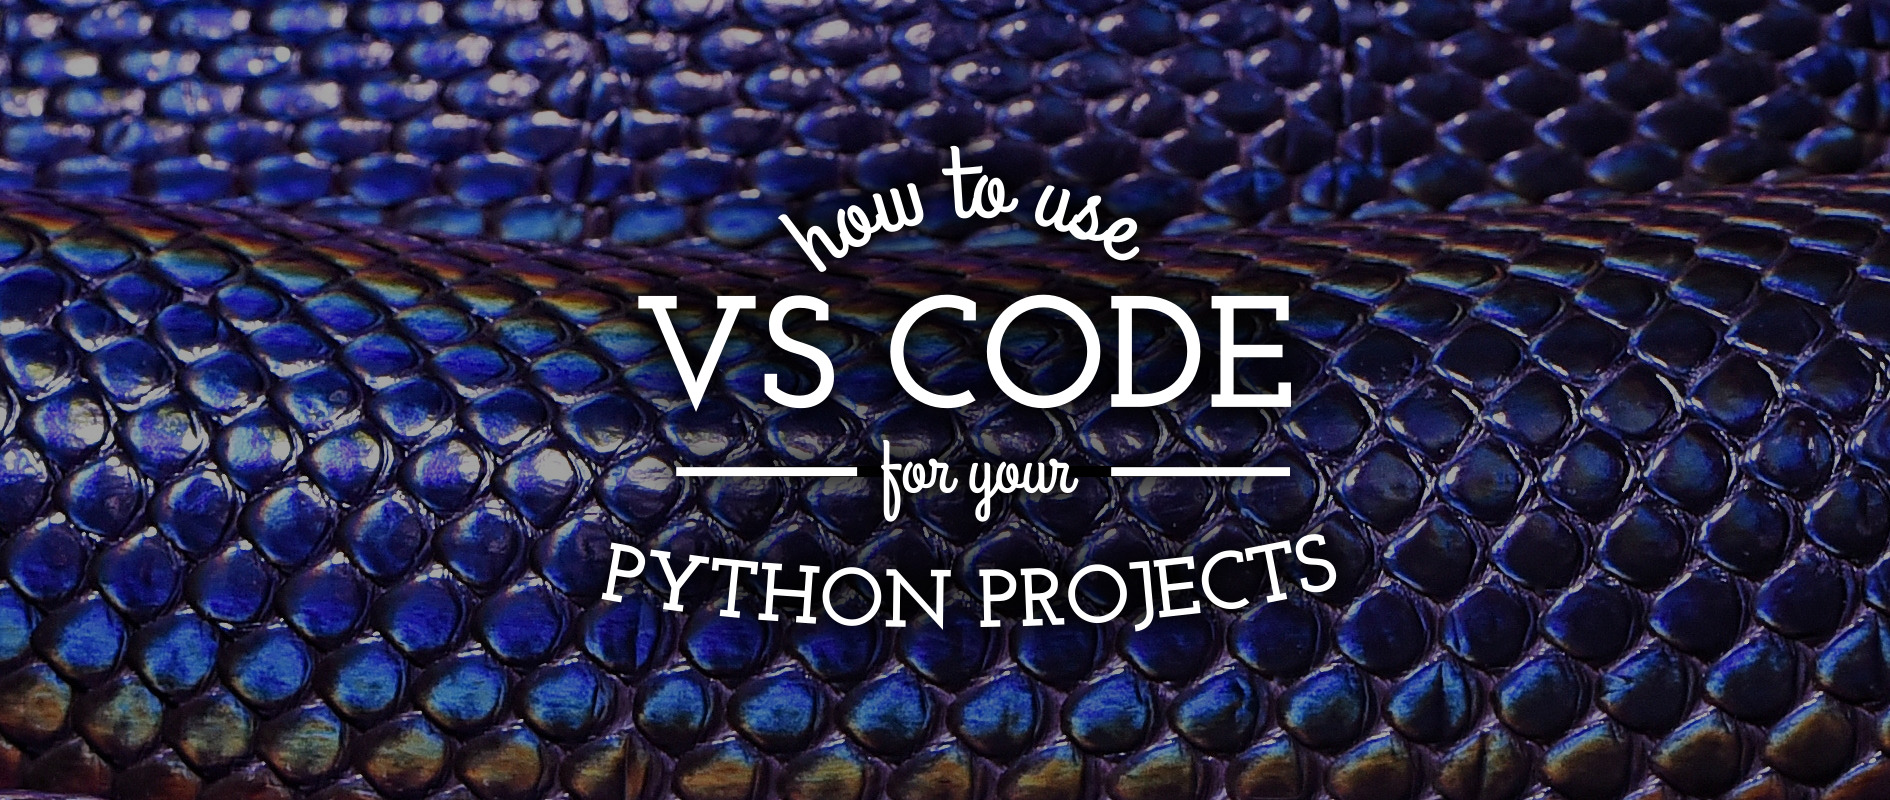 visual studio code for mac python